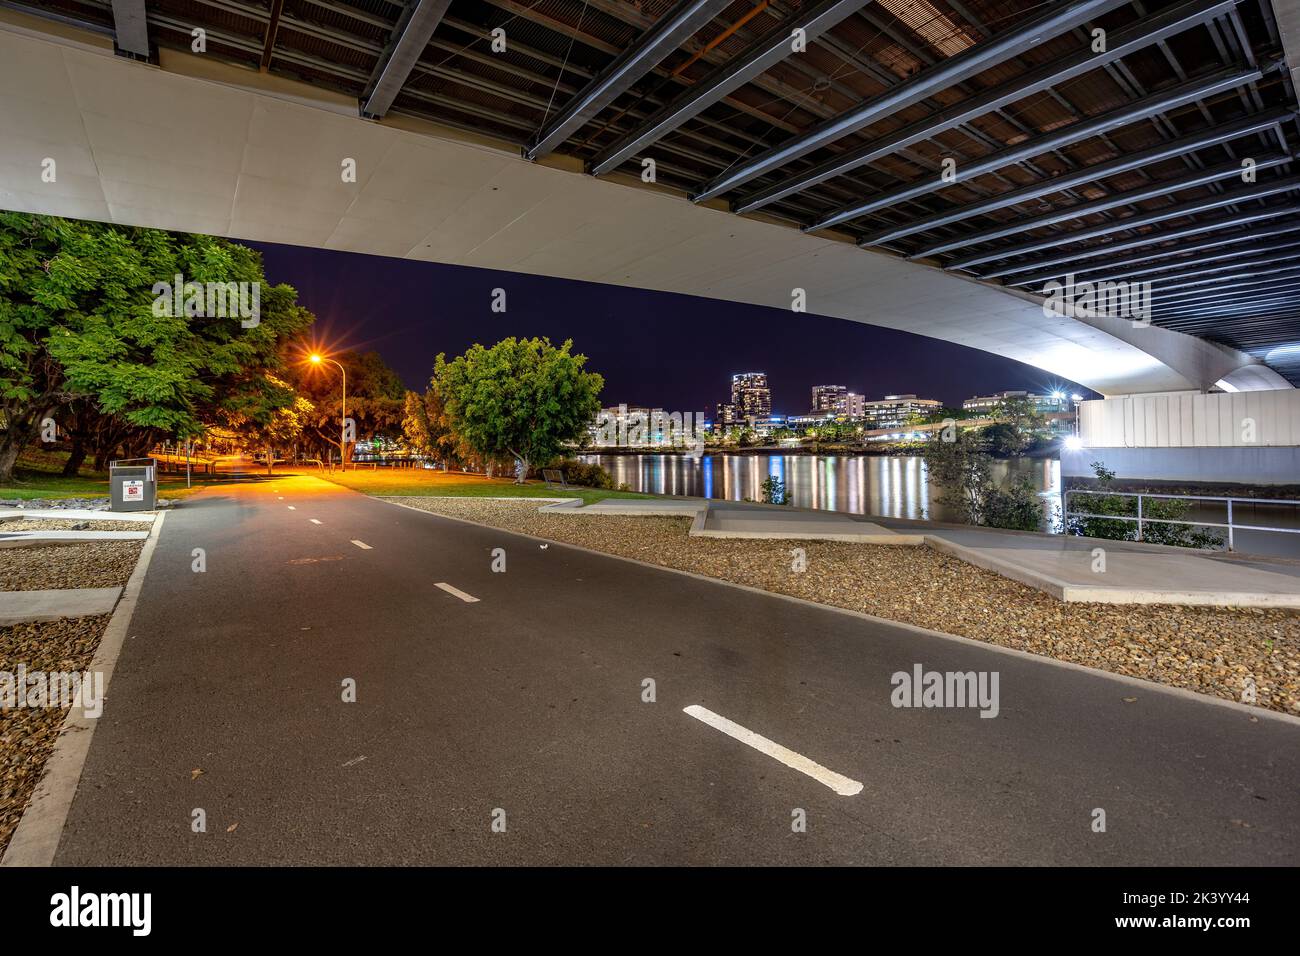 View from under the bridge in South Brisbane, Queensland, Australia Stock Photo